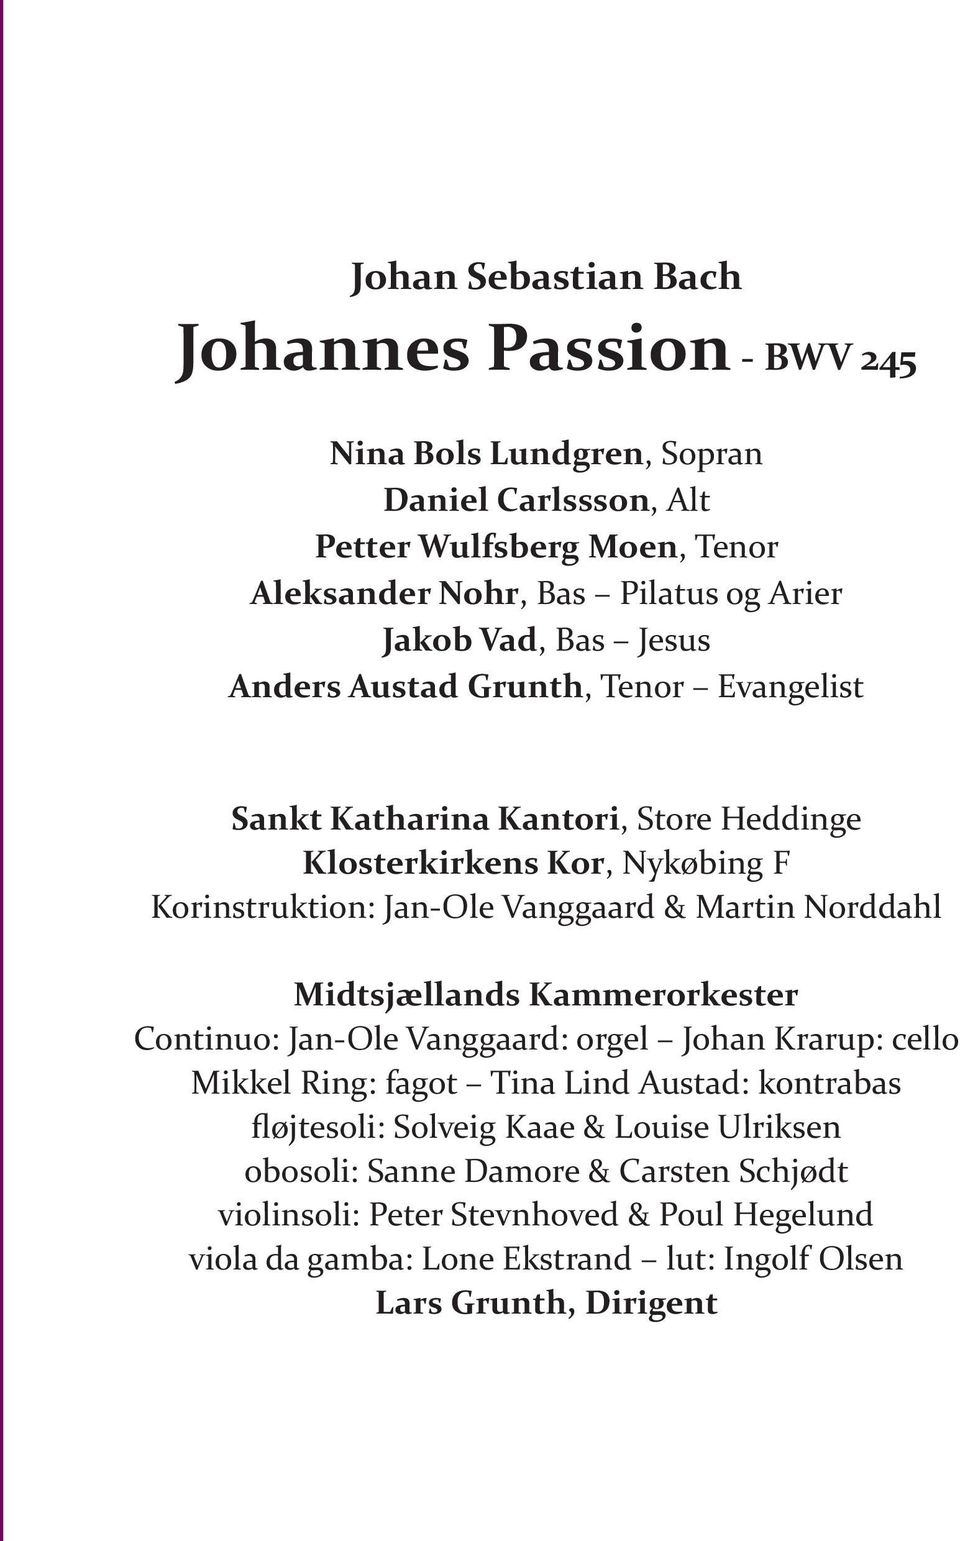 Midtsjællands Kammerorkester Continuo: Jan-Ole Vanggaard: orgel Johan Krarup: cello Mikkel Ring: fagot Tina Lind Austad: kontrabas fløjtesoli: Solveig Kaae &